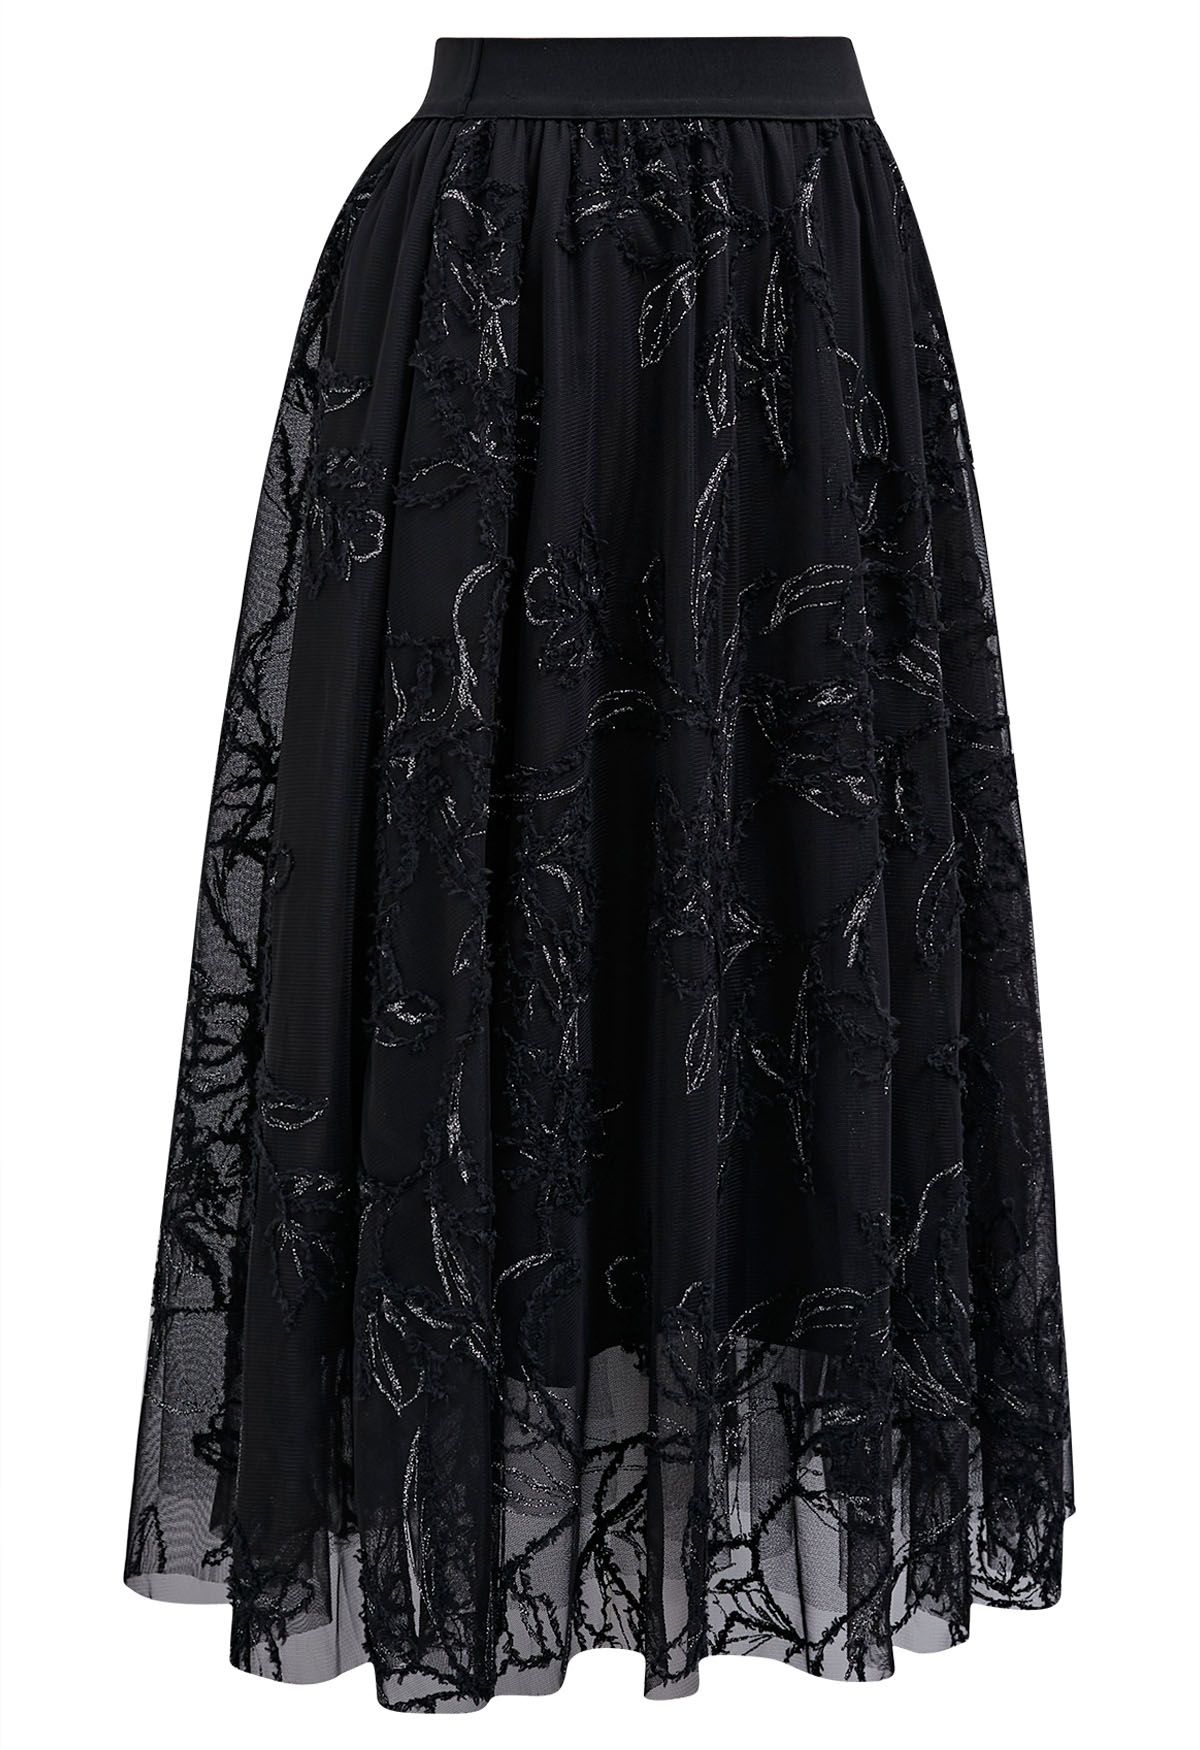 Metallic Thread Fuzzy Floral Mesh Midi Skirt in Black